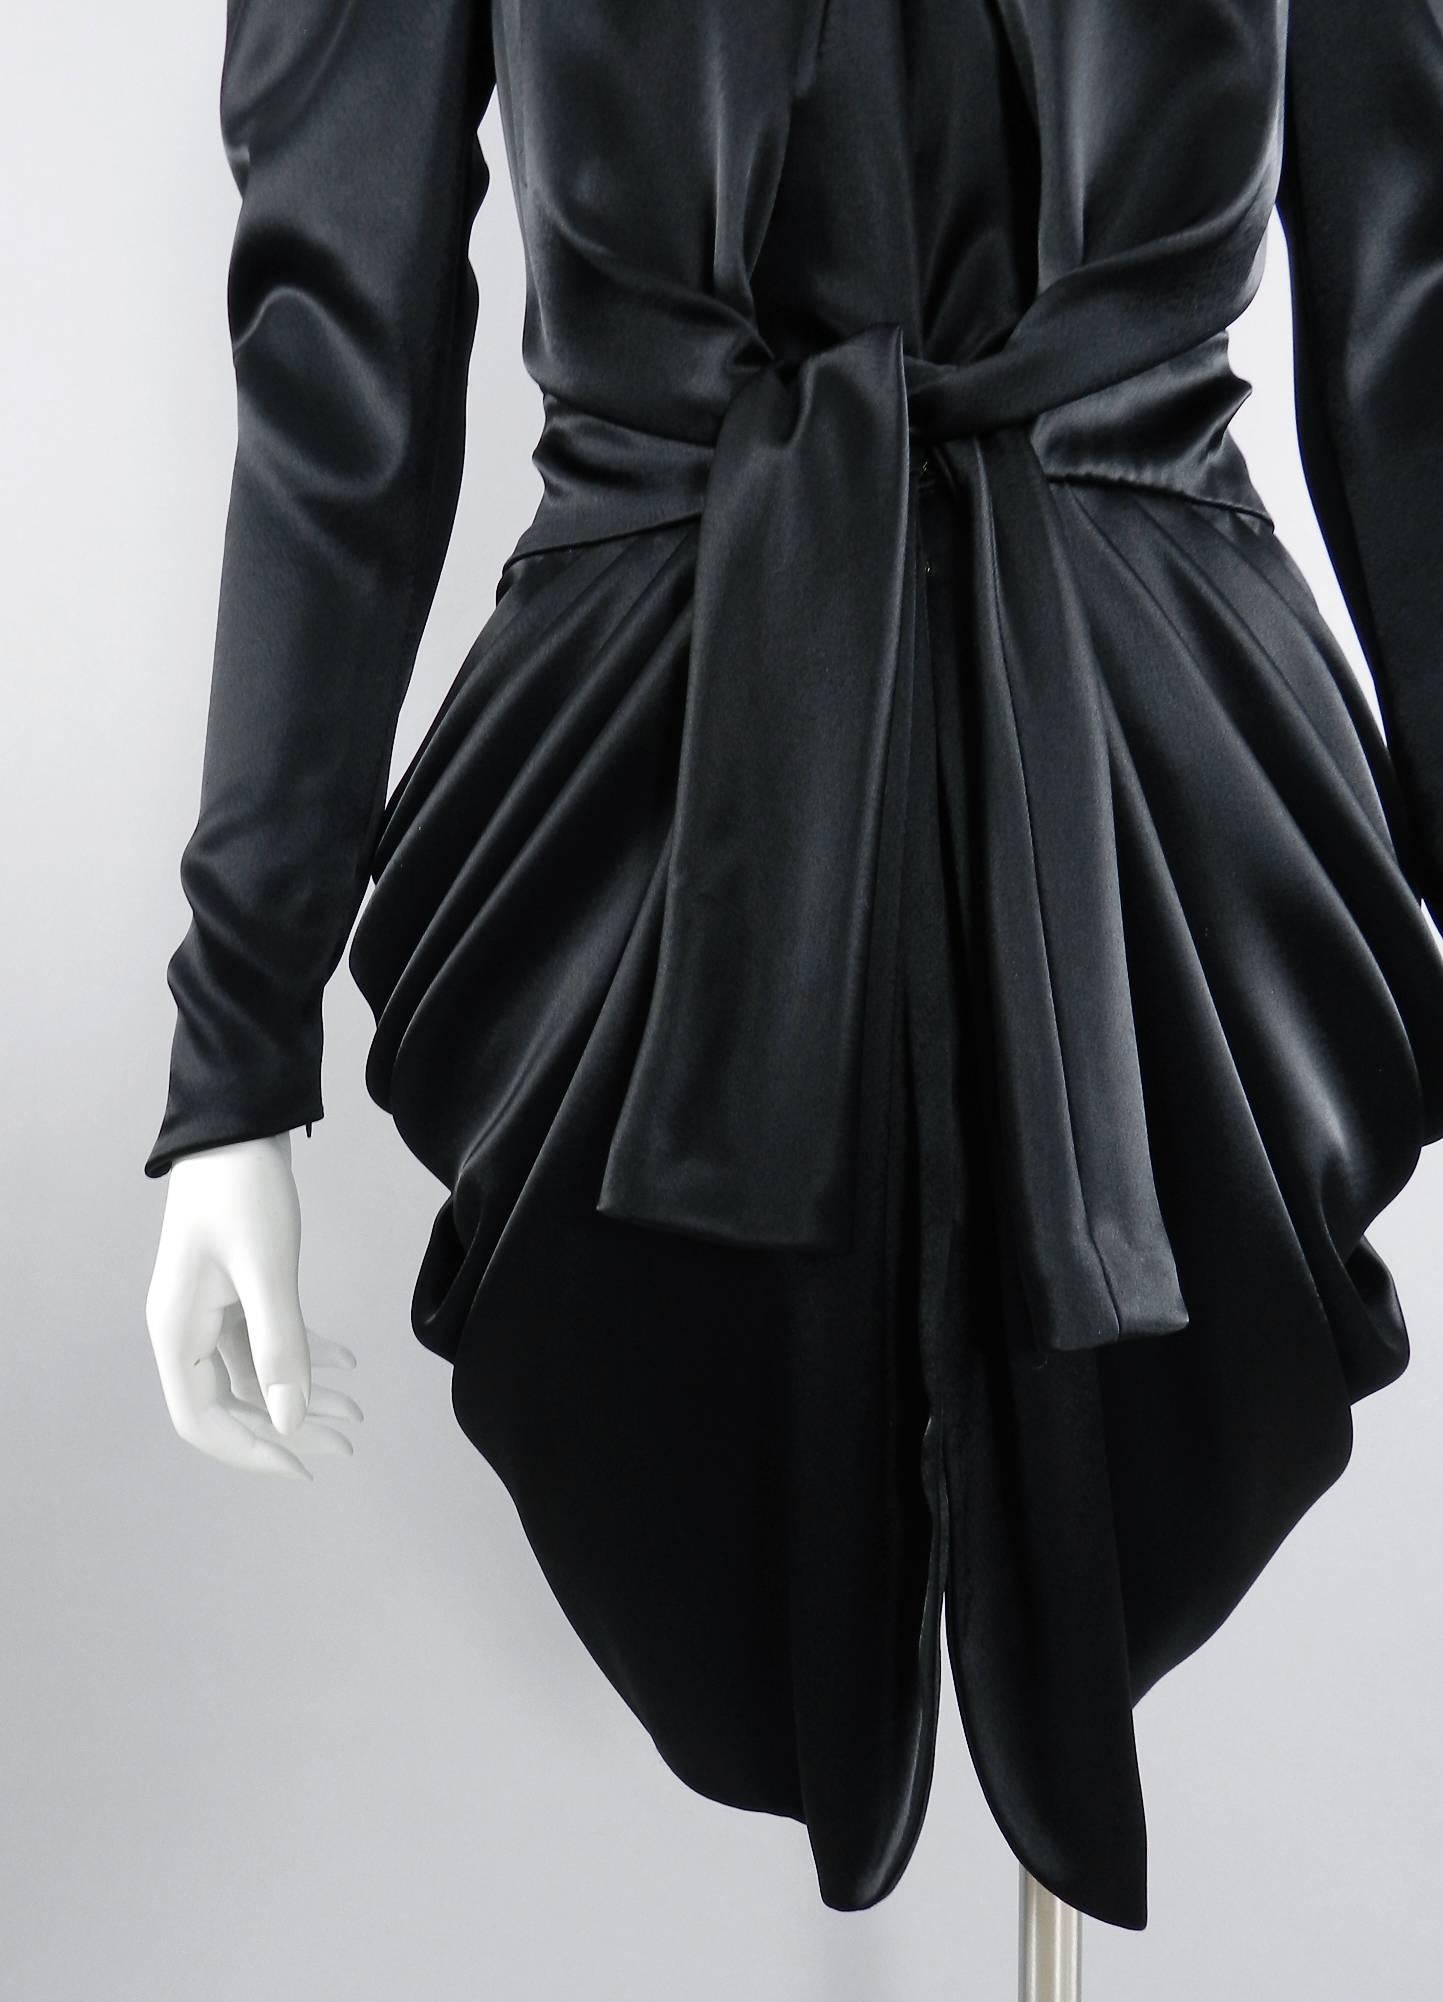 Women's Balenciaga Nicholas Ghesquiere Fall 2009 Black Satin Gathered Dress